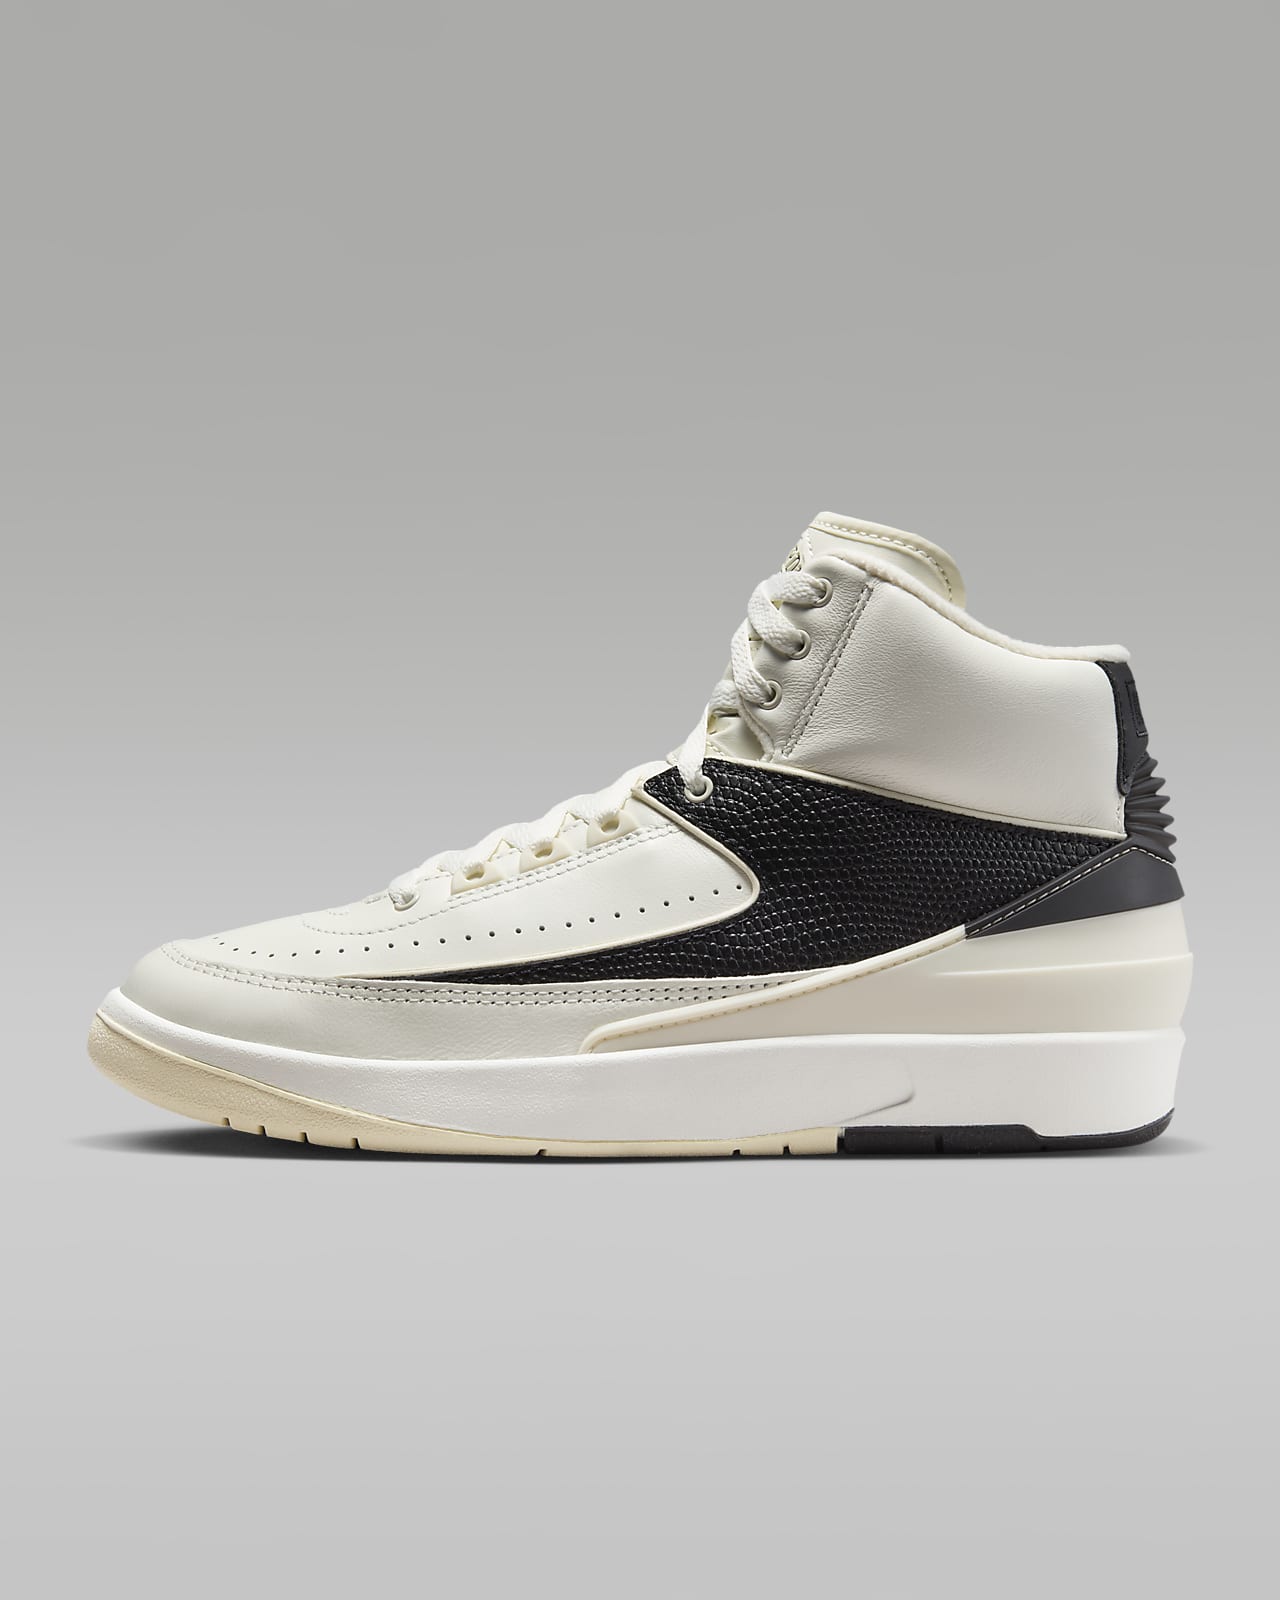 Nike Air Jordan 2 High靴